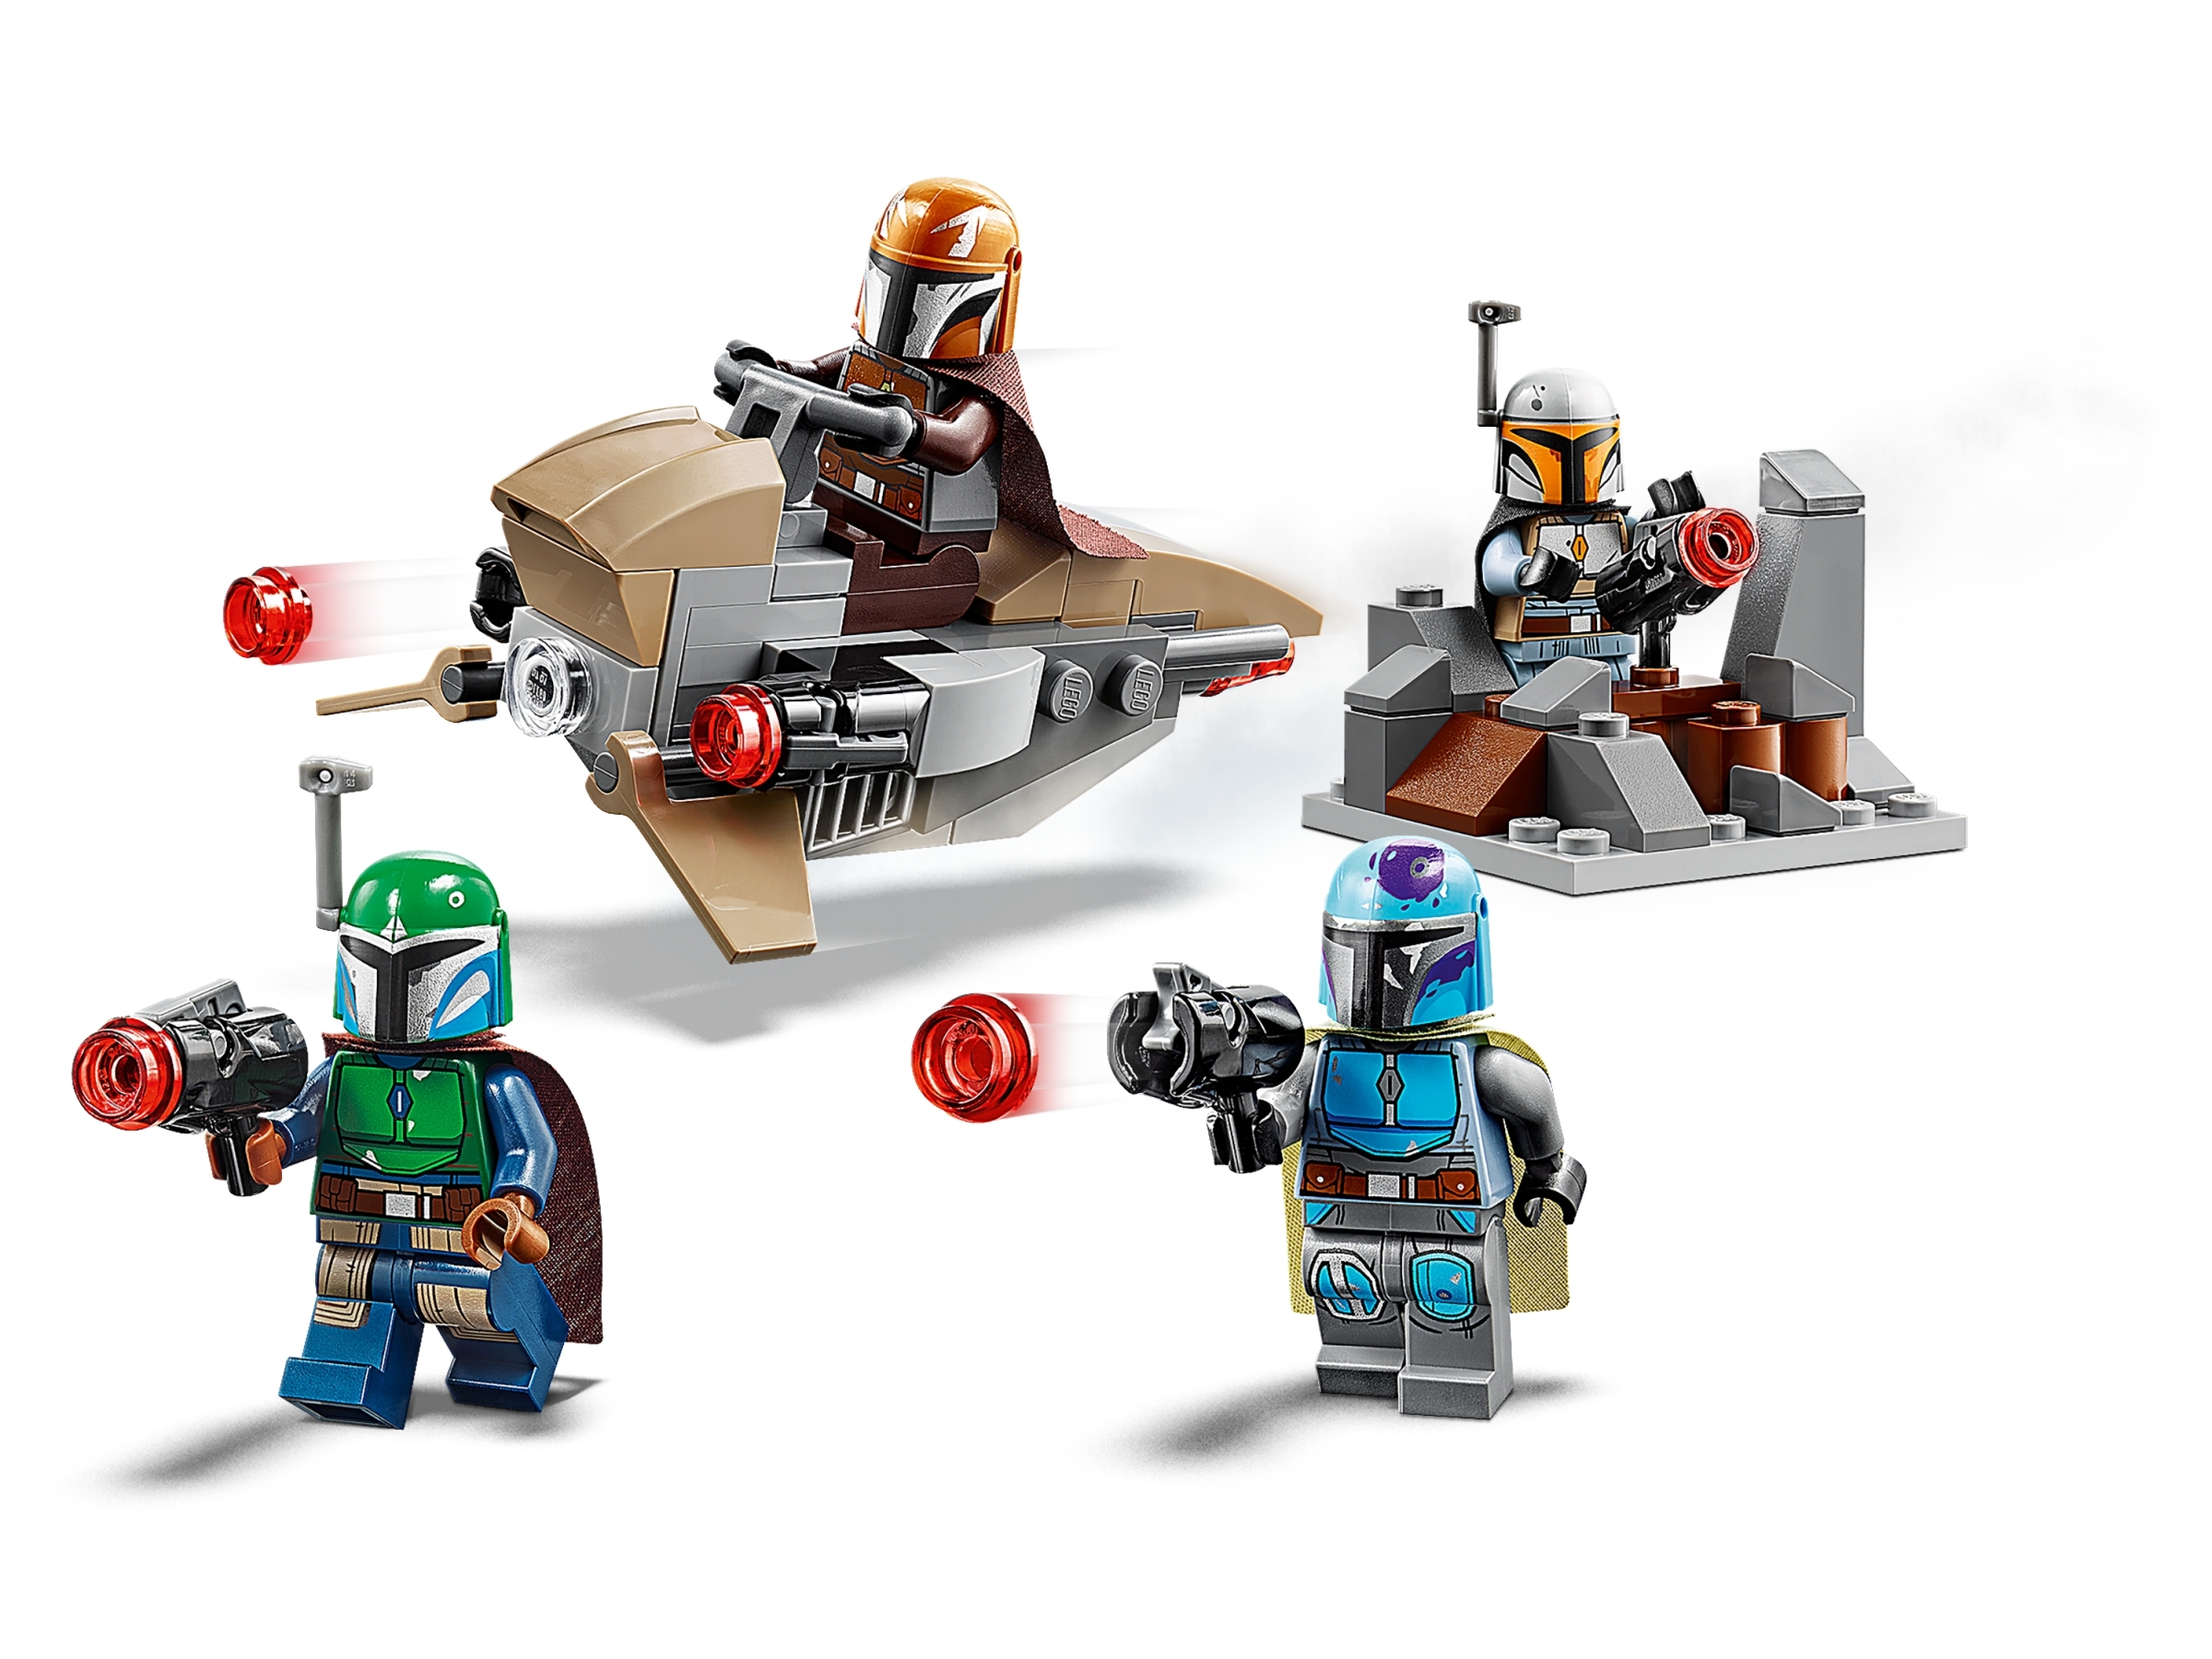 Lego Set 75267 Star Wars Mandalorian Battle Pack Sealed Box Brand New In Stock